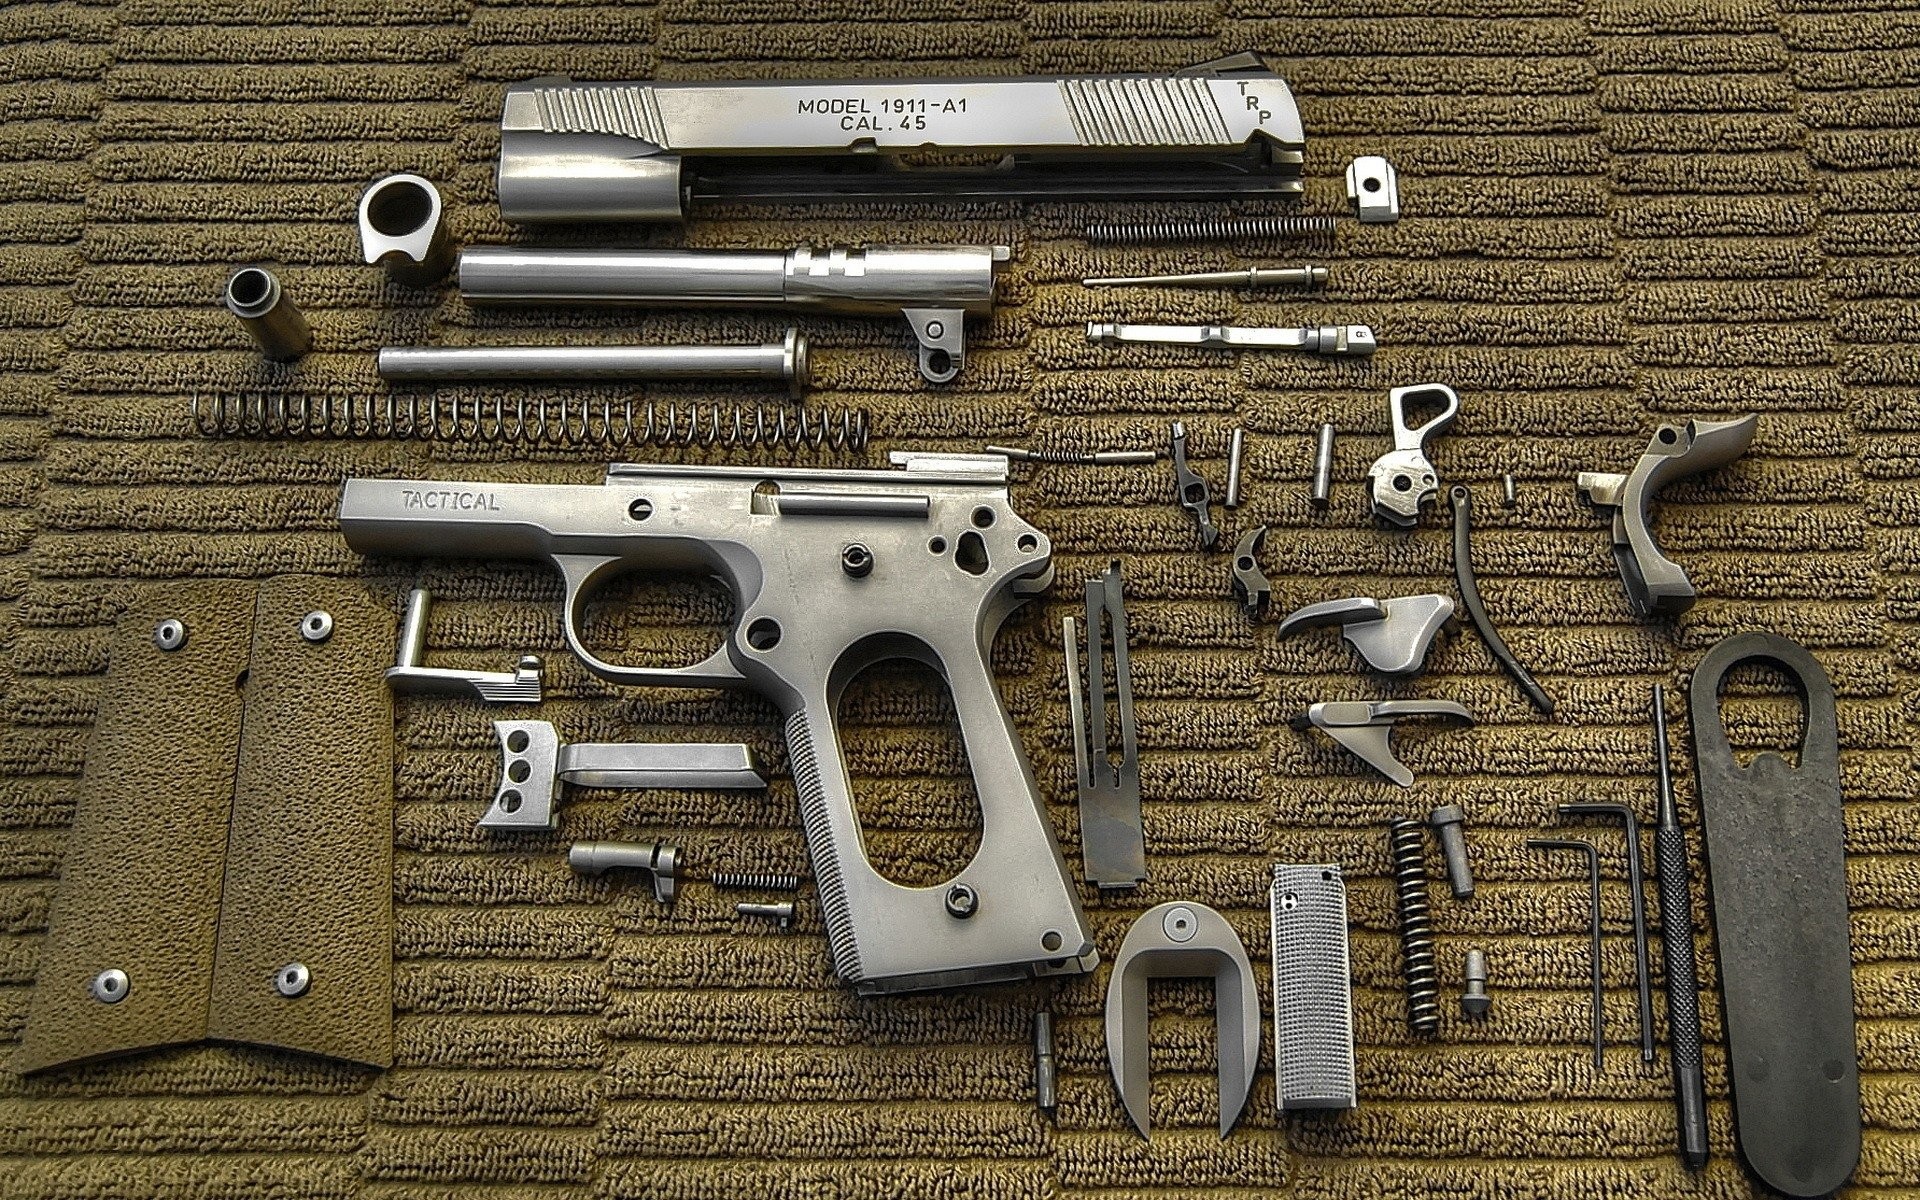 1911 wallpaper,firearm,gun,trigger,gun accessory,air gun